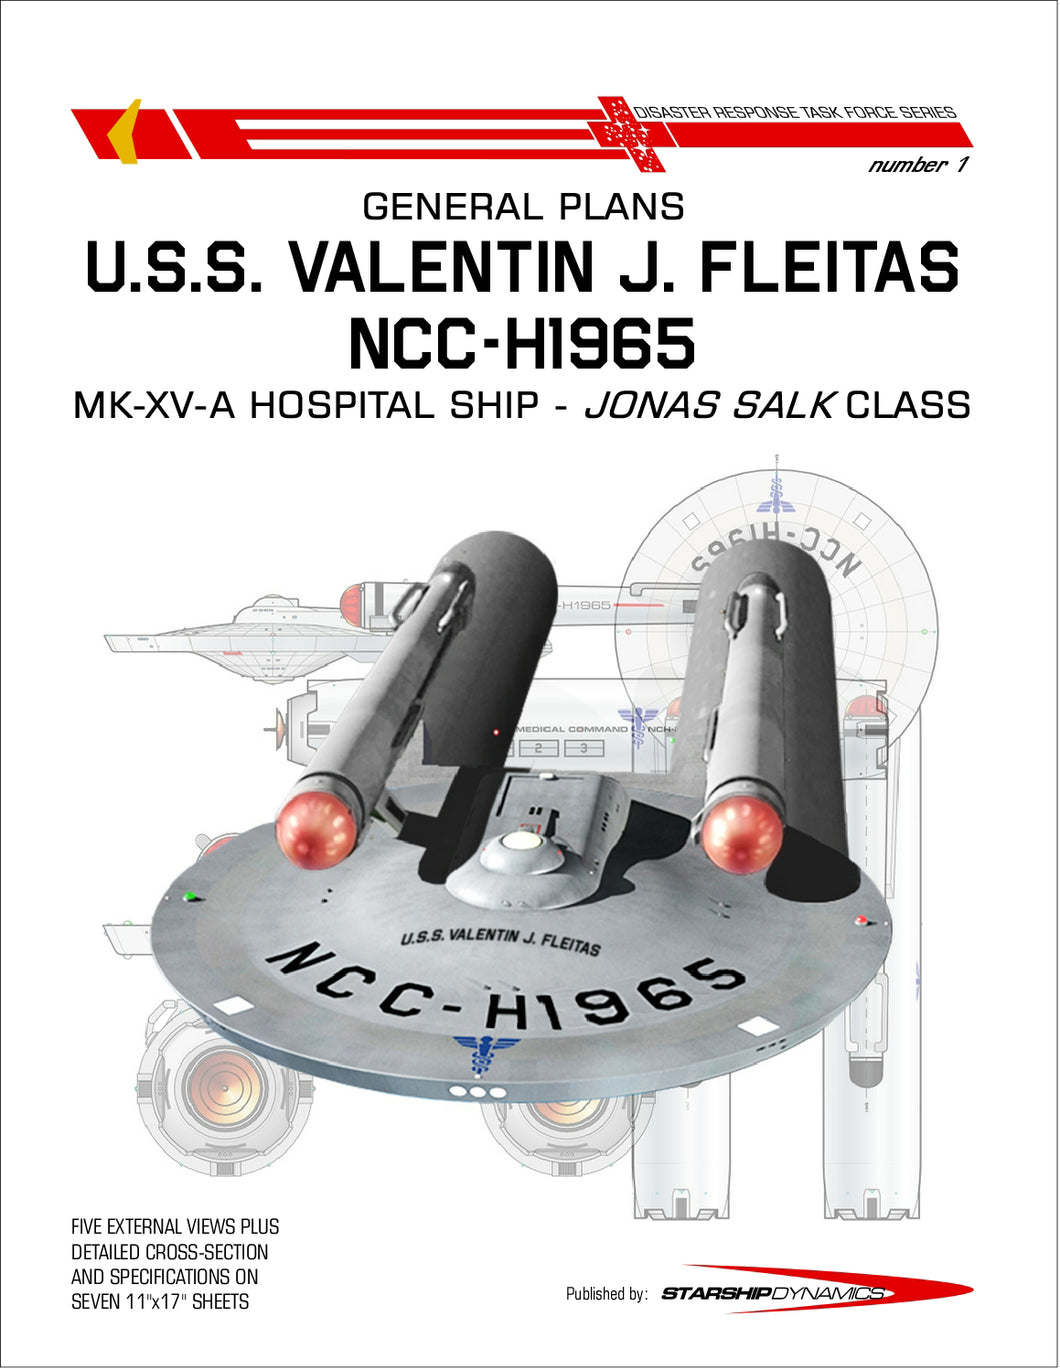 MK-XV-A Hospital Ship, U.S.S. Valentin J. Fleitas NCC-H1965, Salk class starship: General Plans